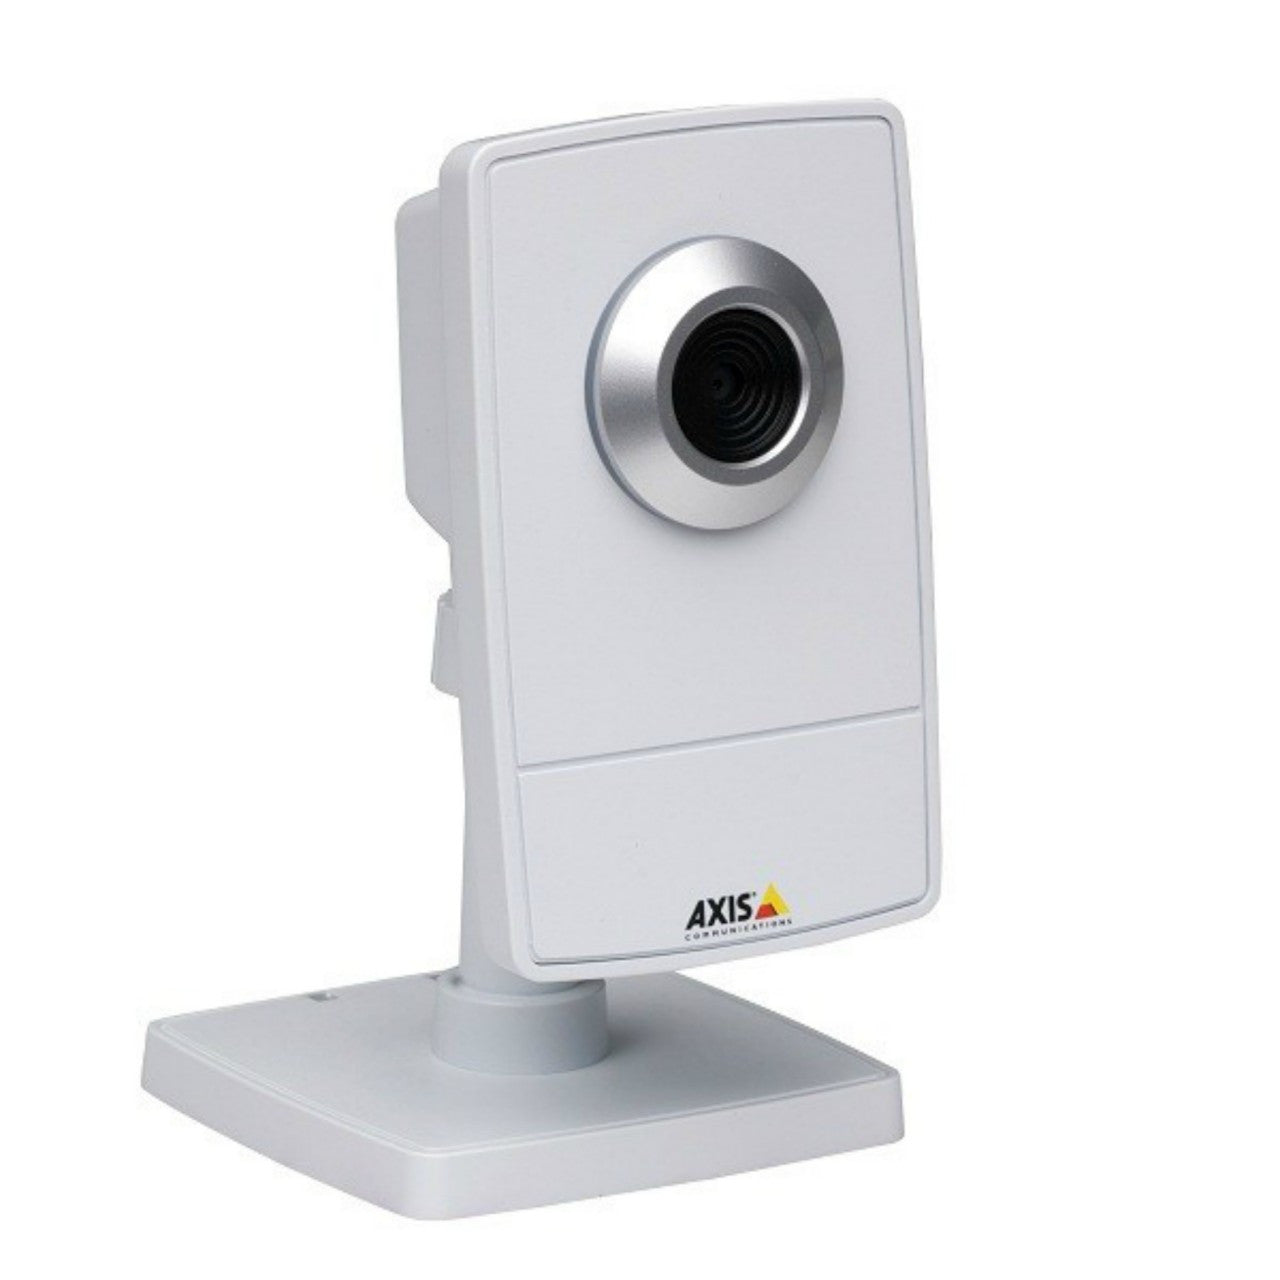 AXIS M1031-W (0300-004) Wireless Network Camera